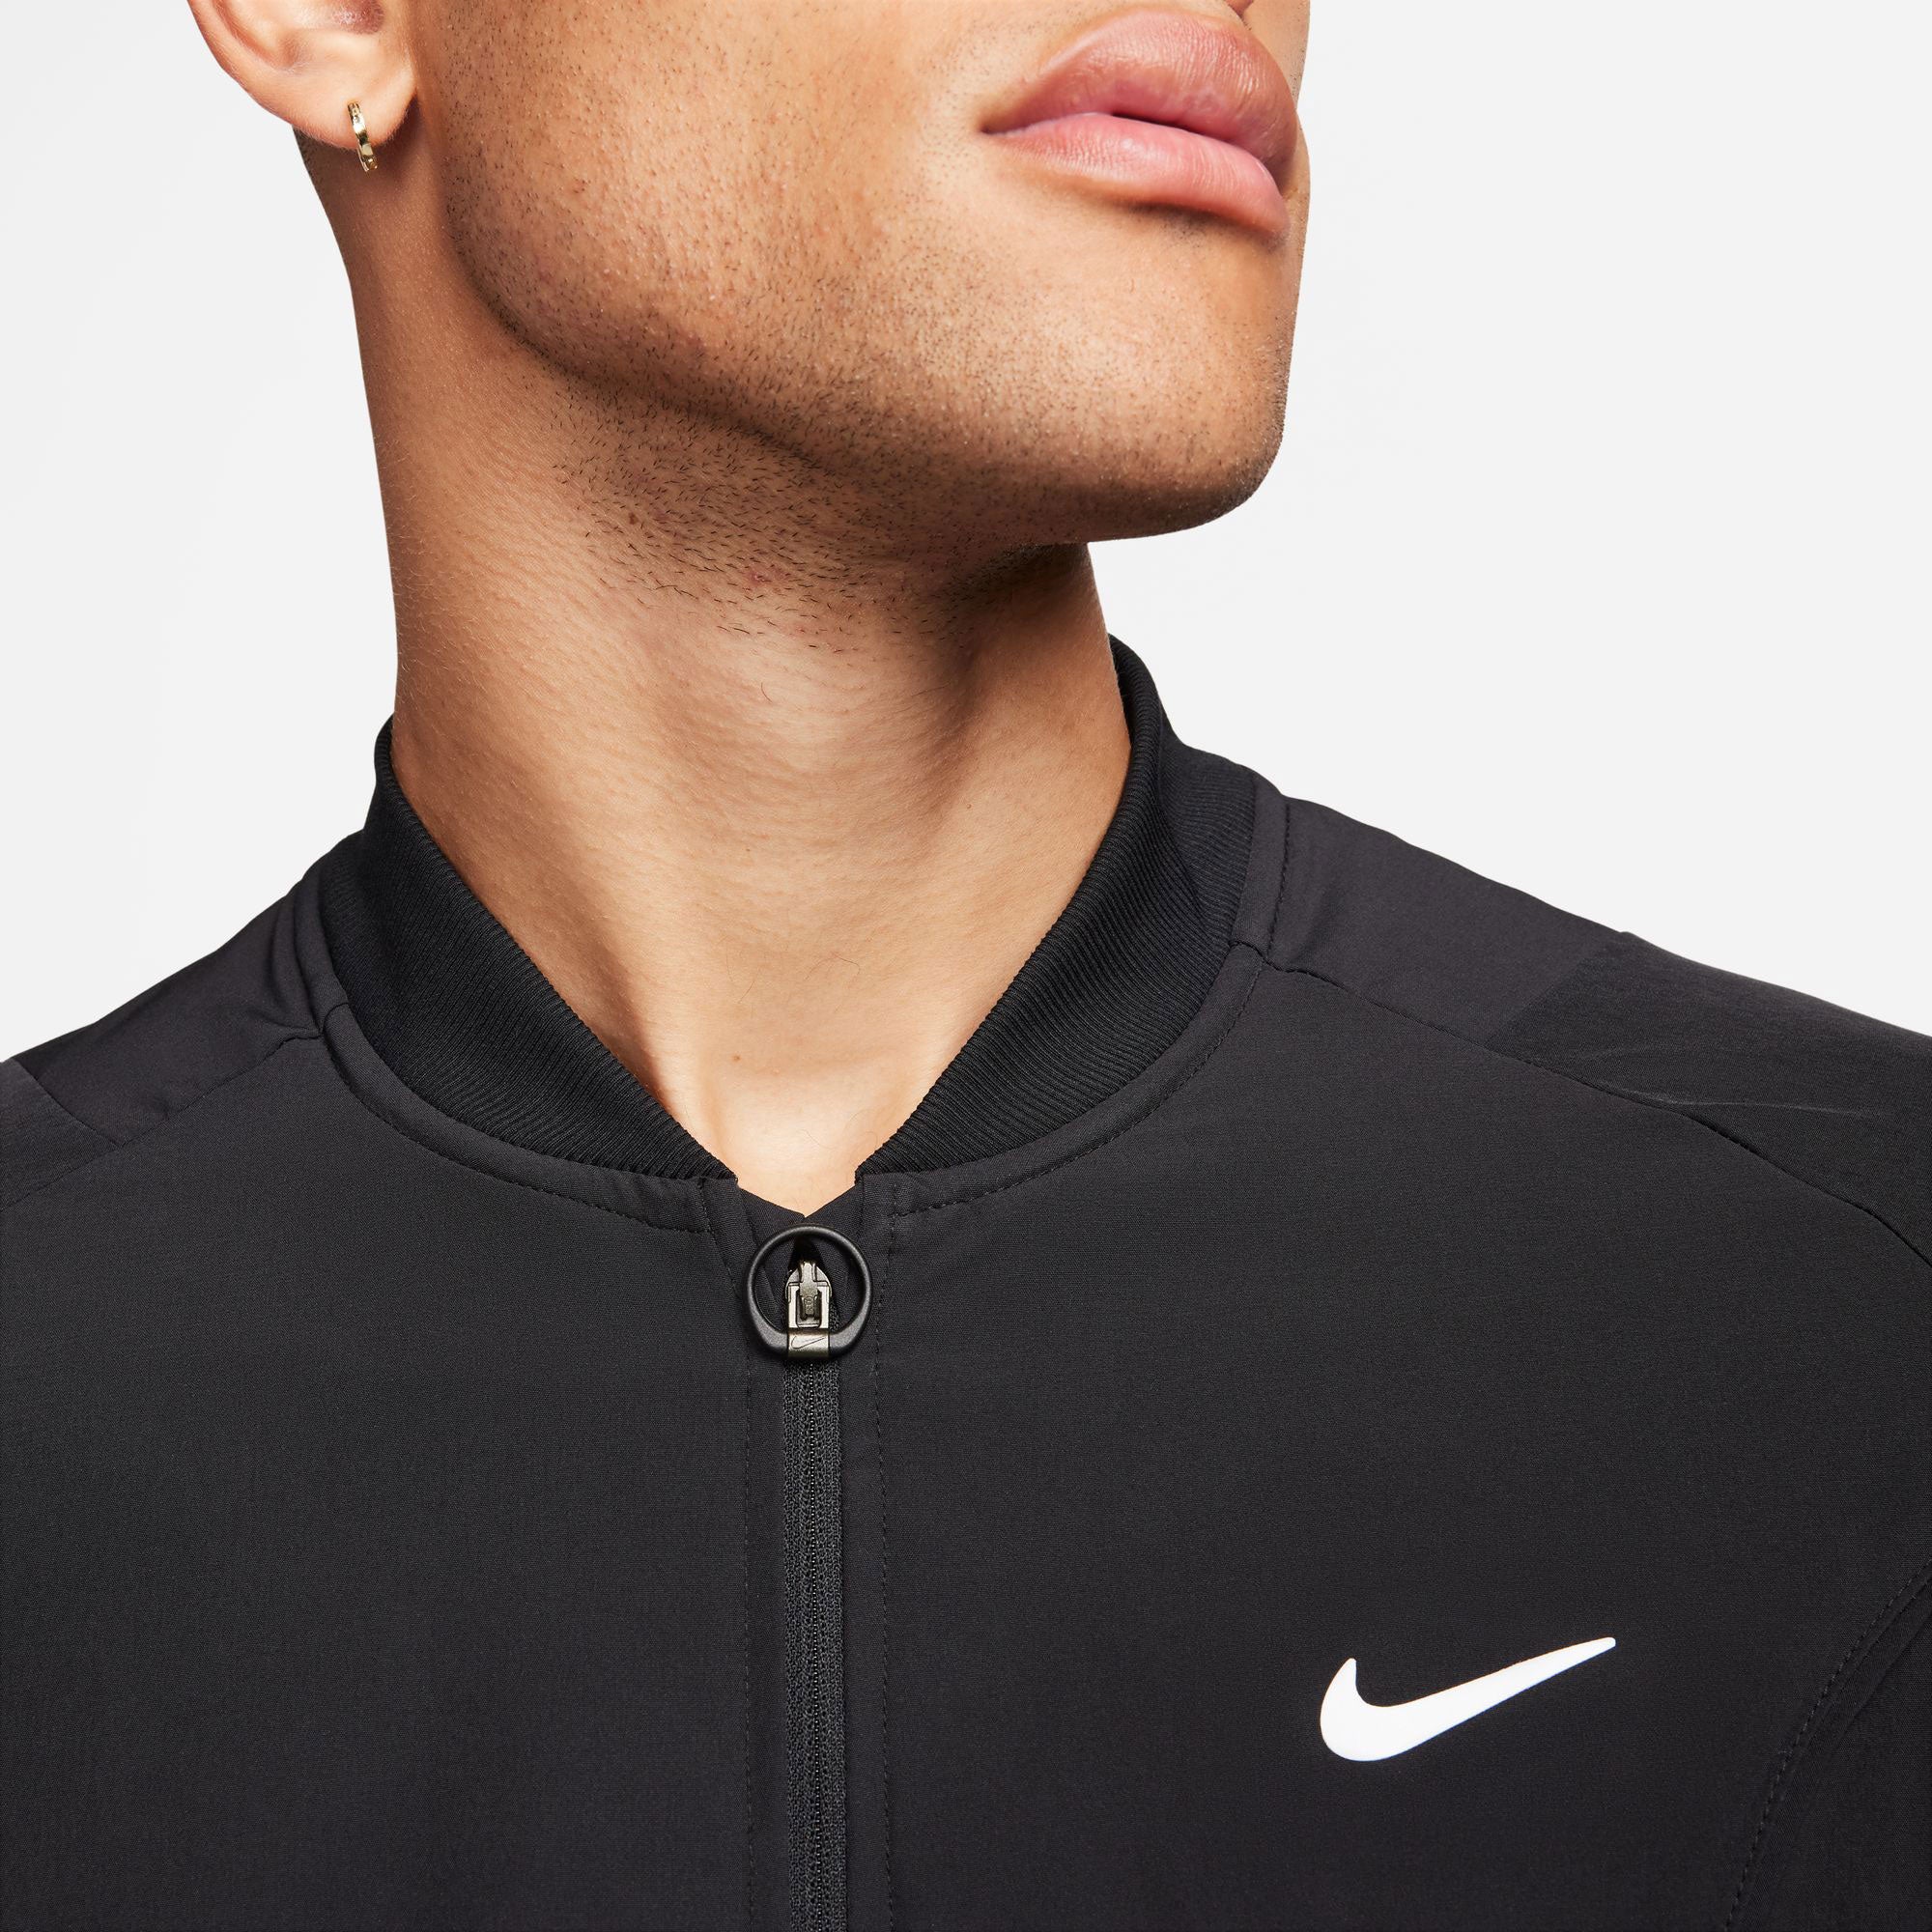 NikeCourt Advantage Men's Dri-FIT Tennis Jacket - Black (4)